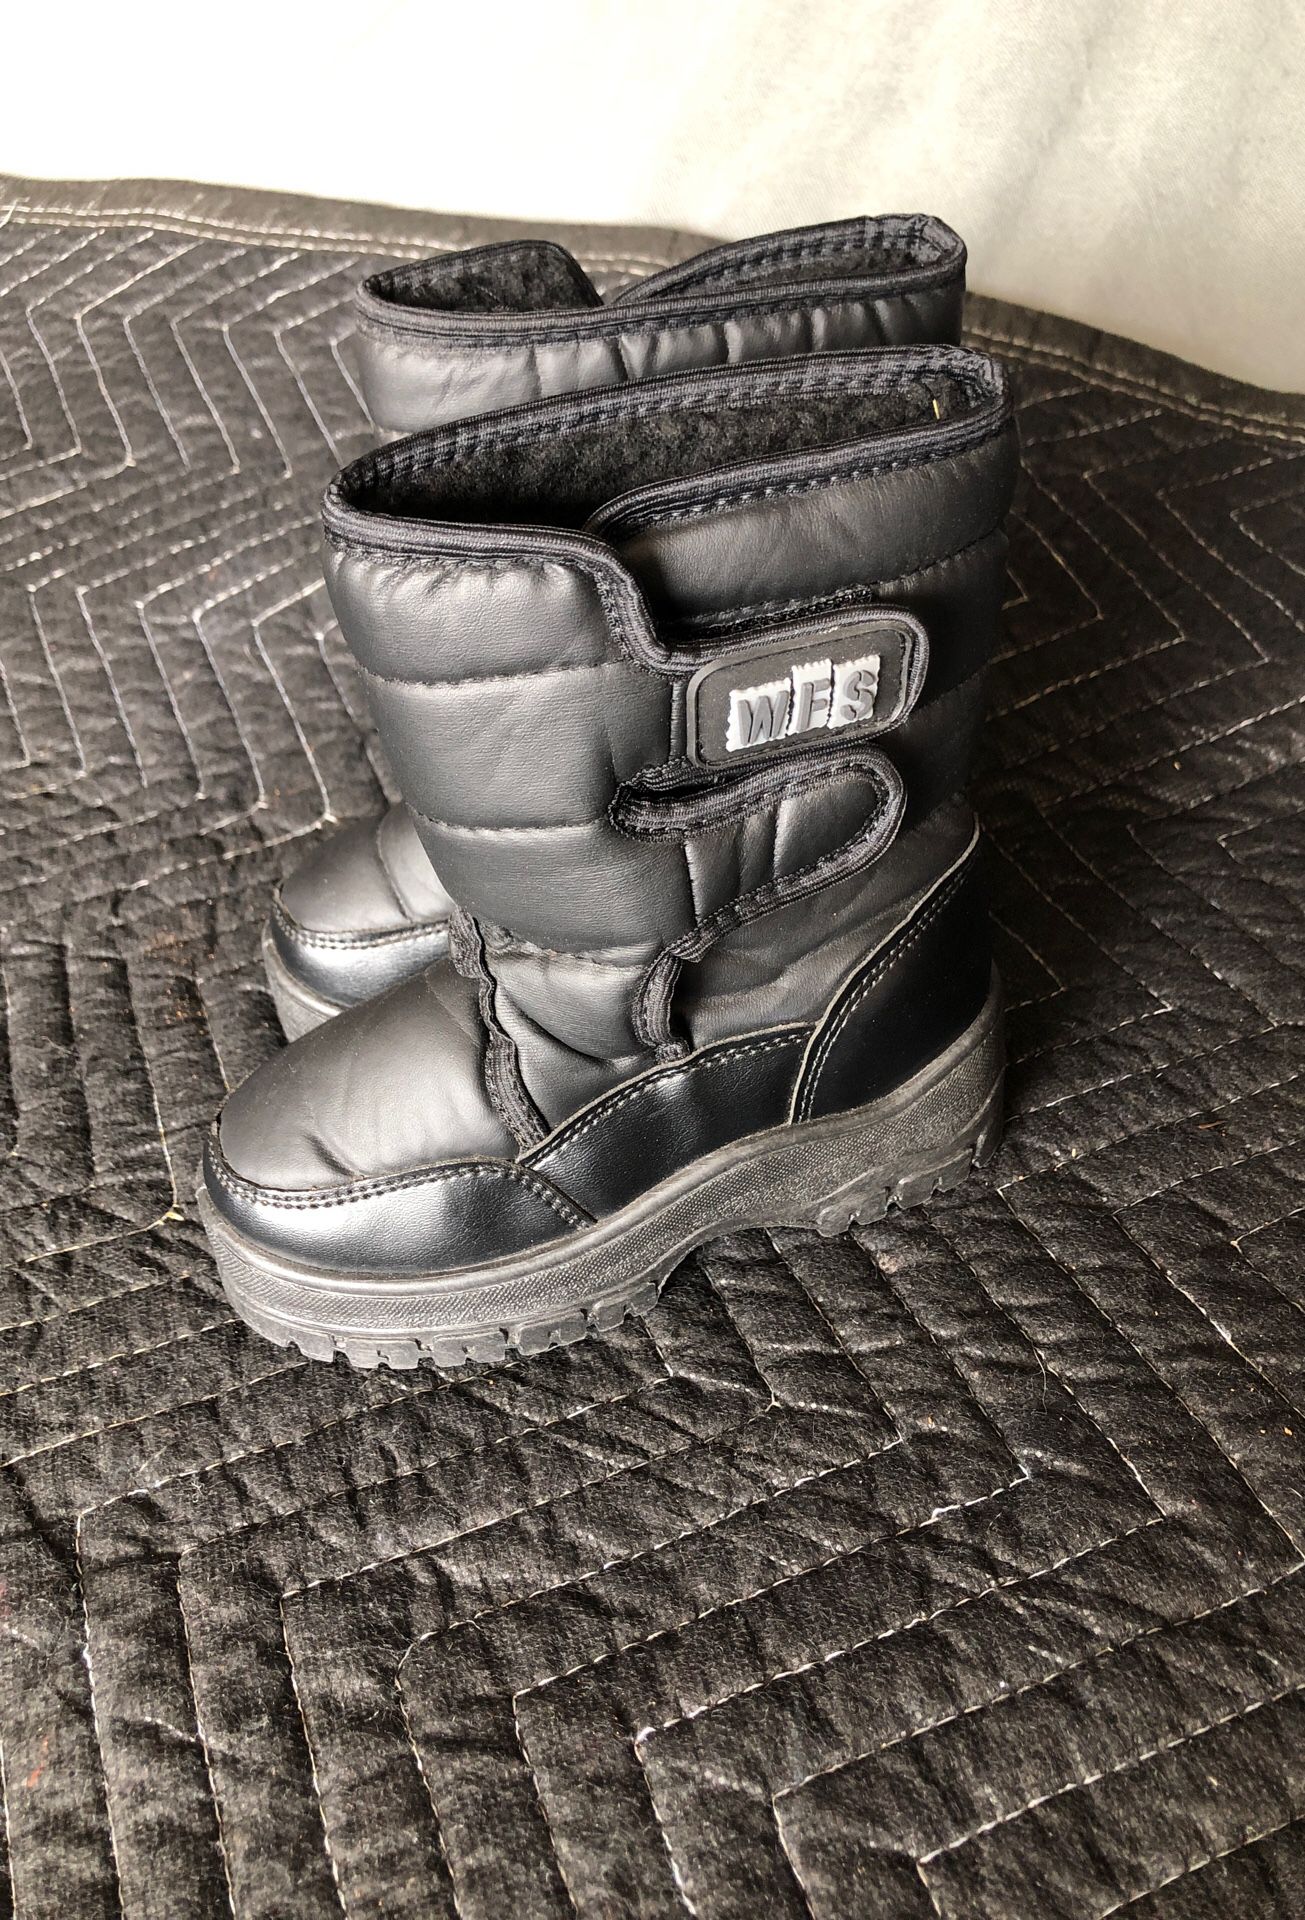 WFS kids snow boots size 9